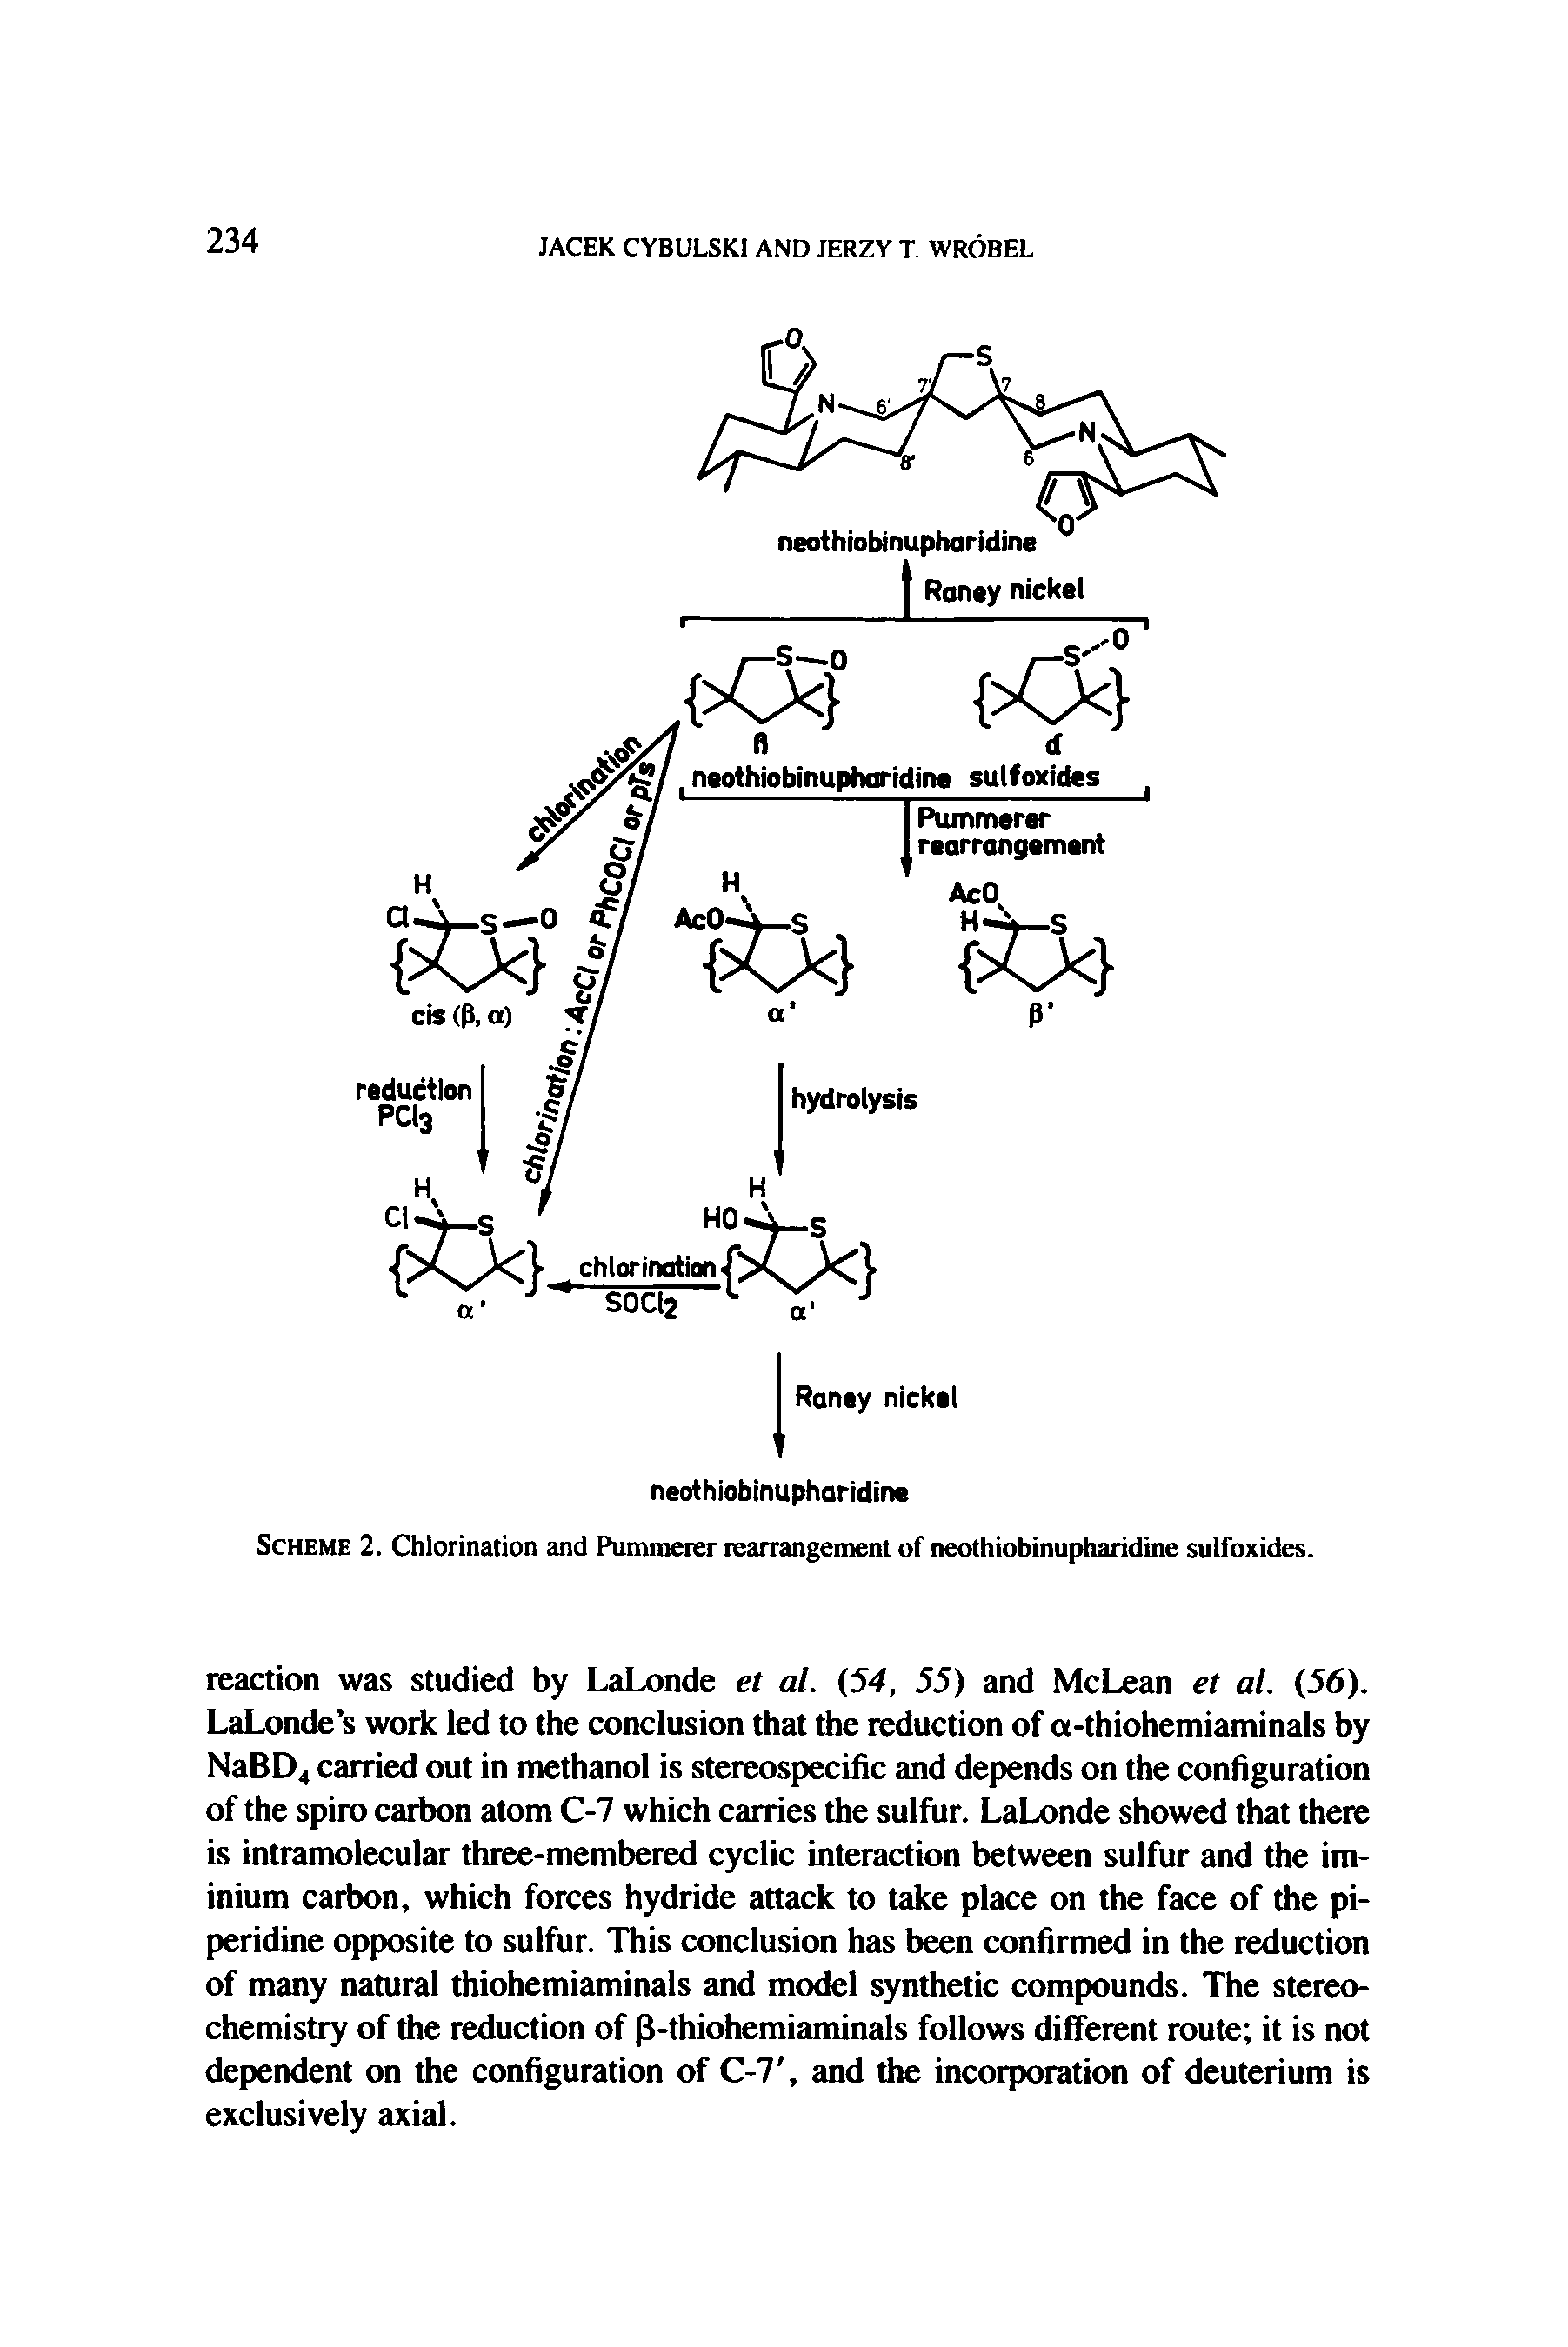 Scheme 2. Chlorination and Pummerer rearrangement of neothiobinupharidine sulfoxides.